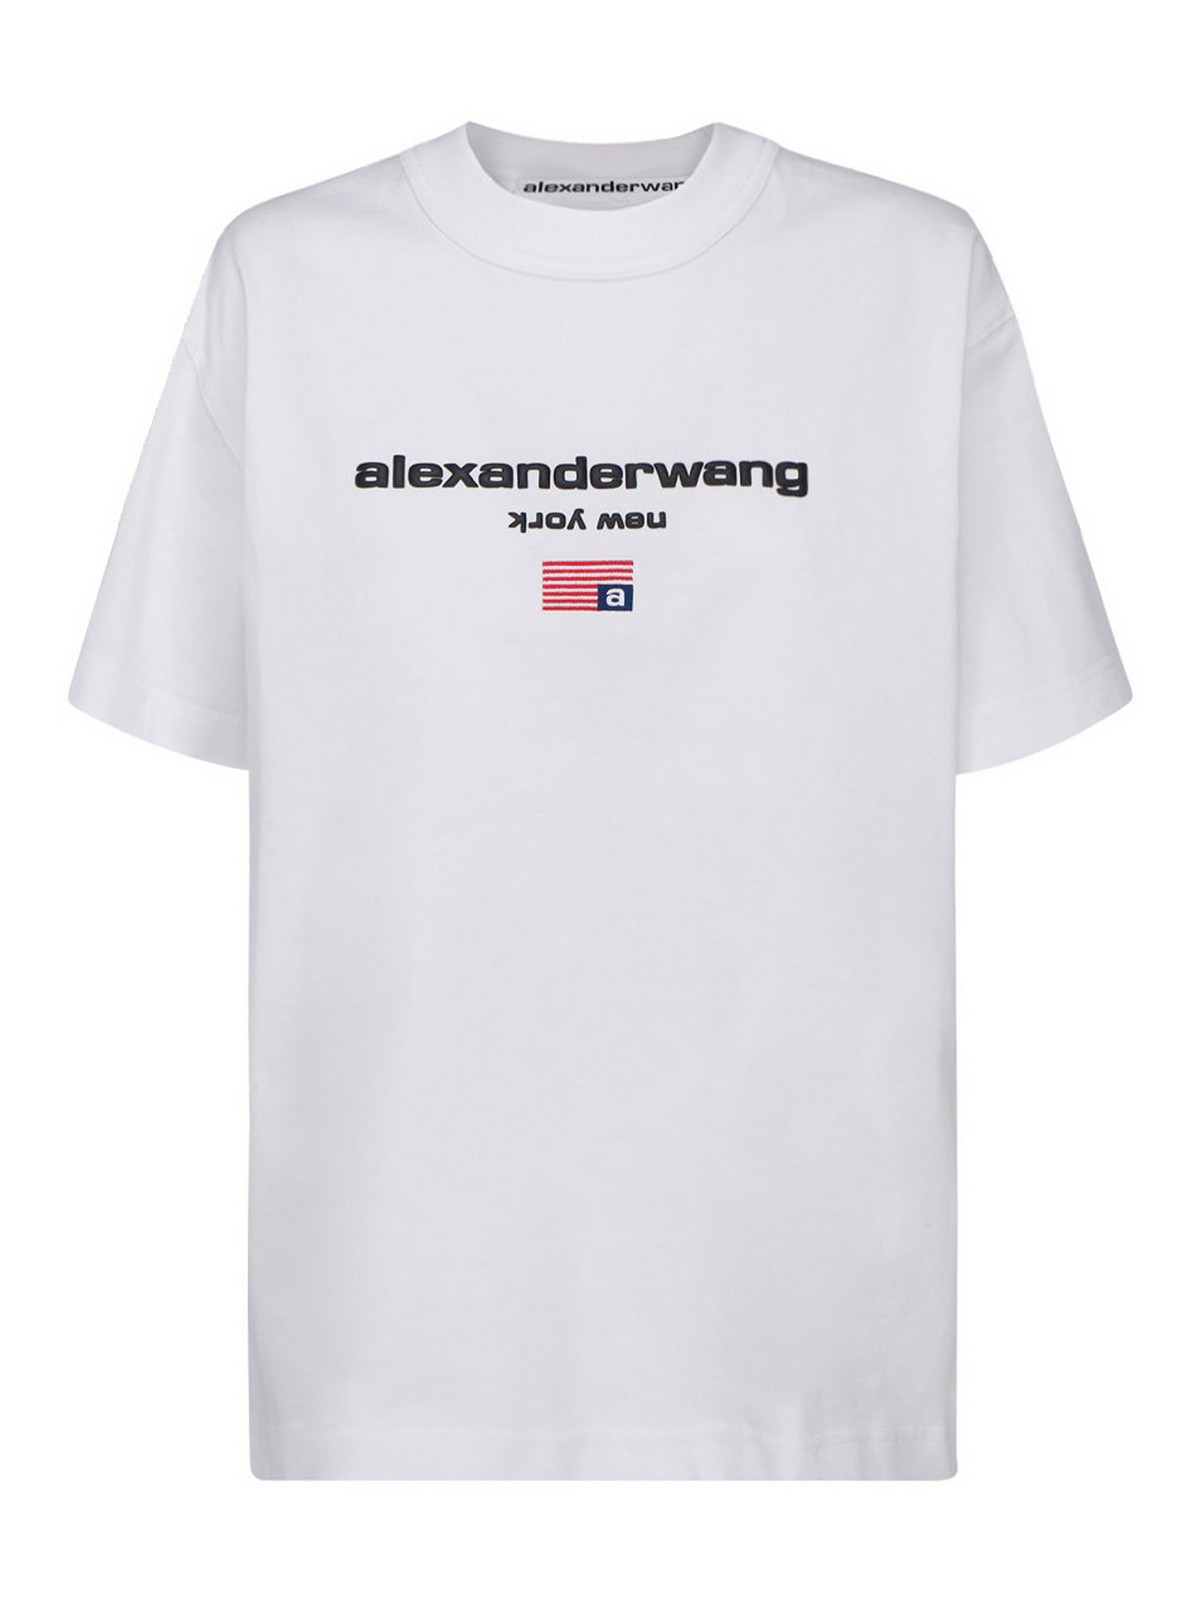 alexanderwang Tシャツ - rehda.com